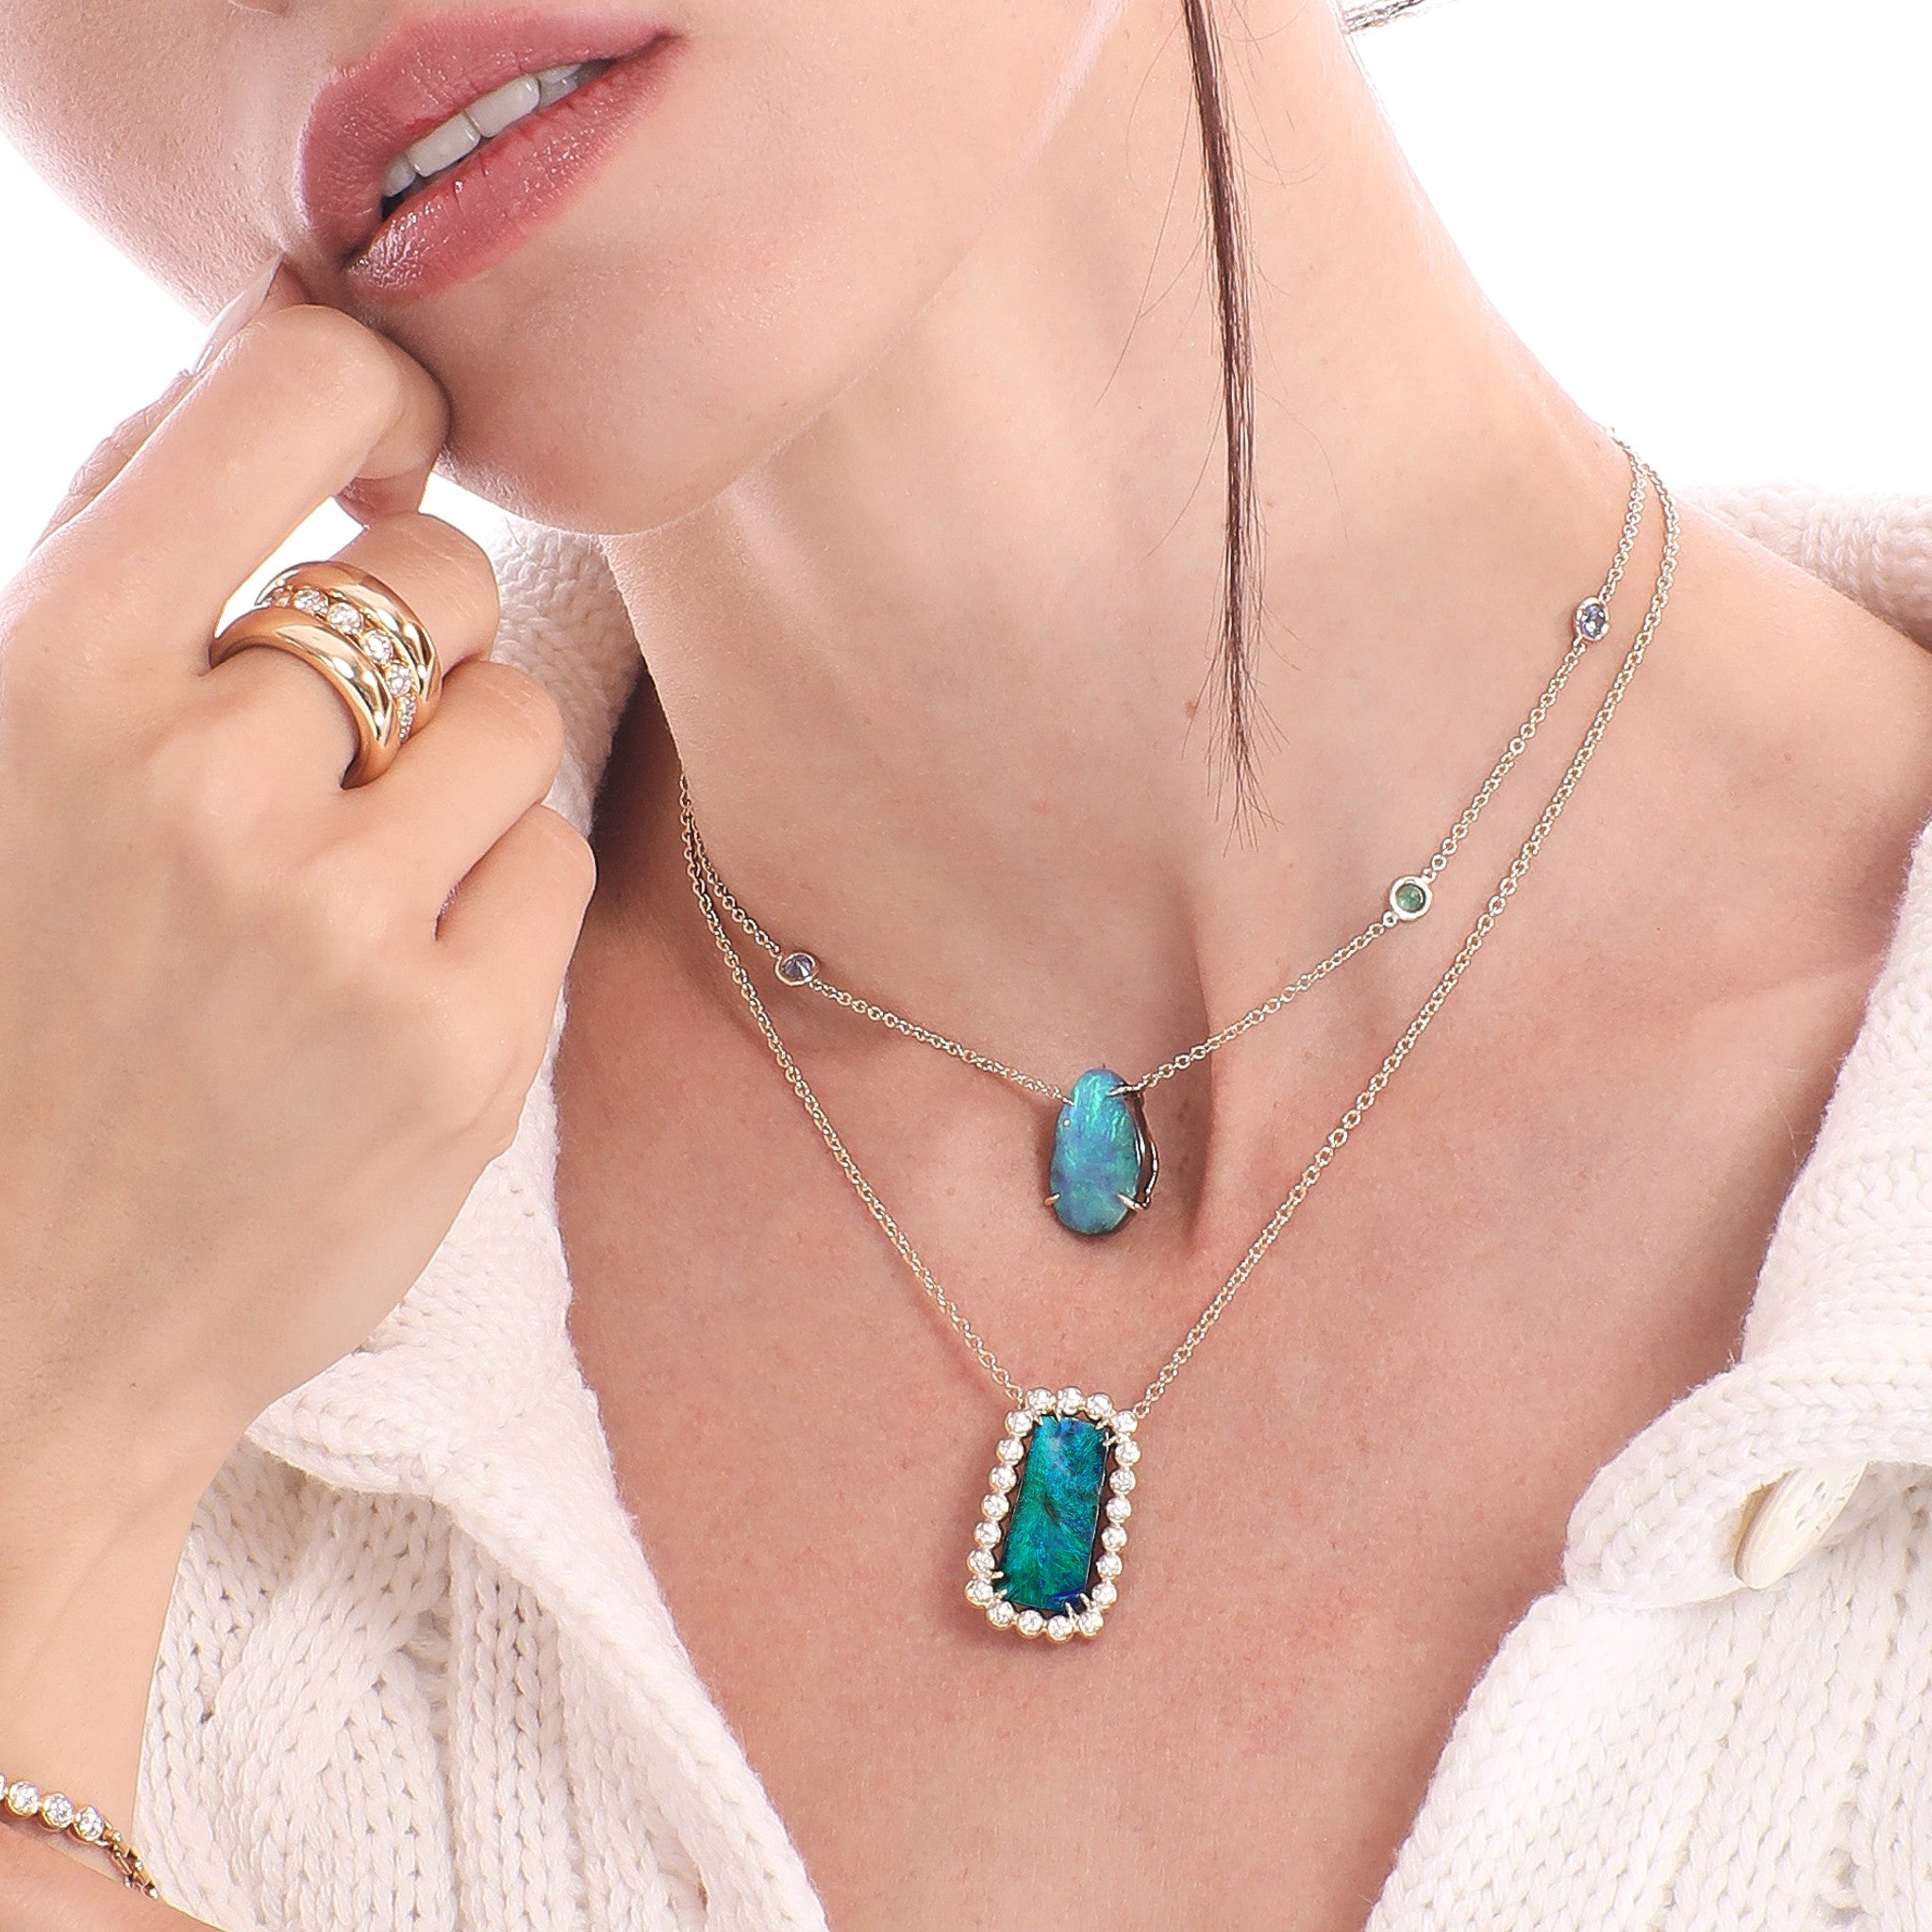 Australian Boulder Opal and Diamond Pendant Necklace